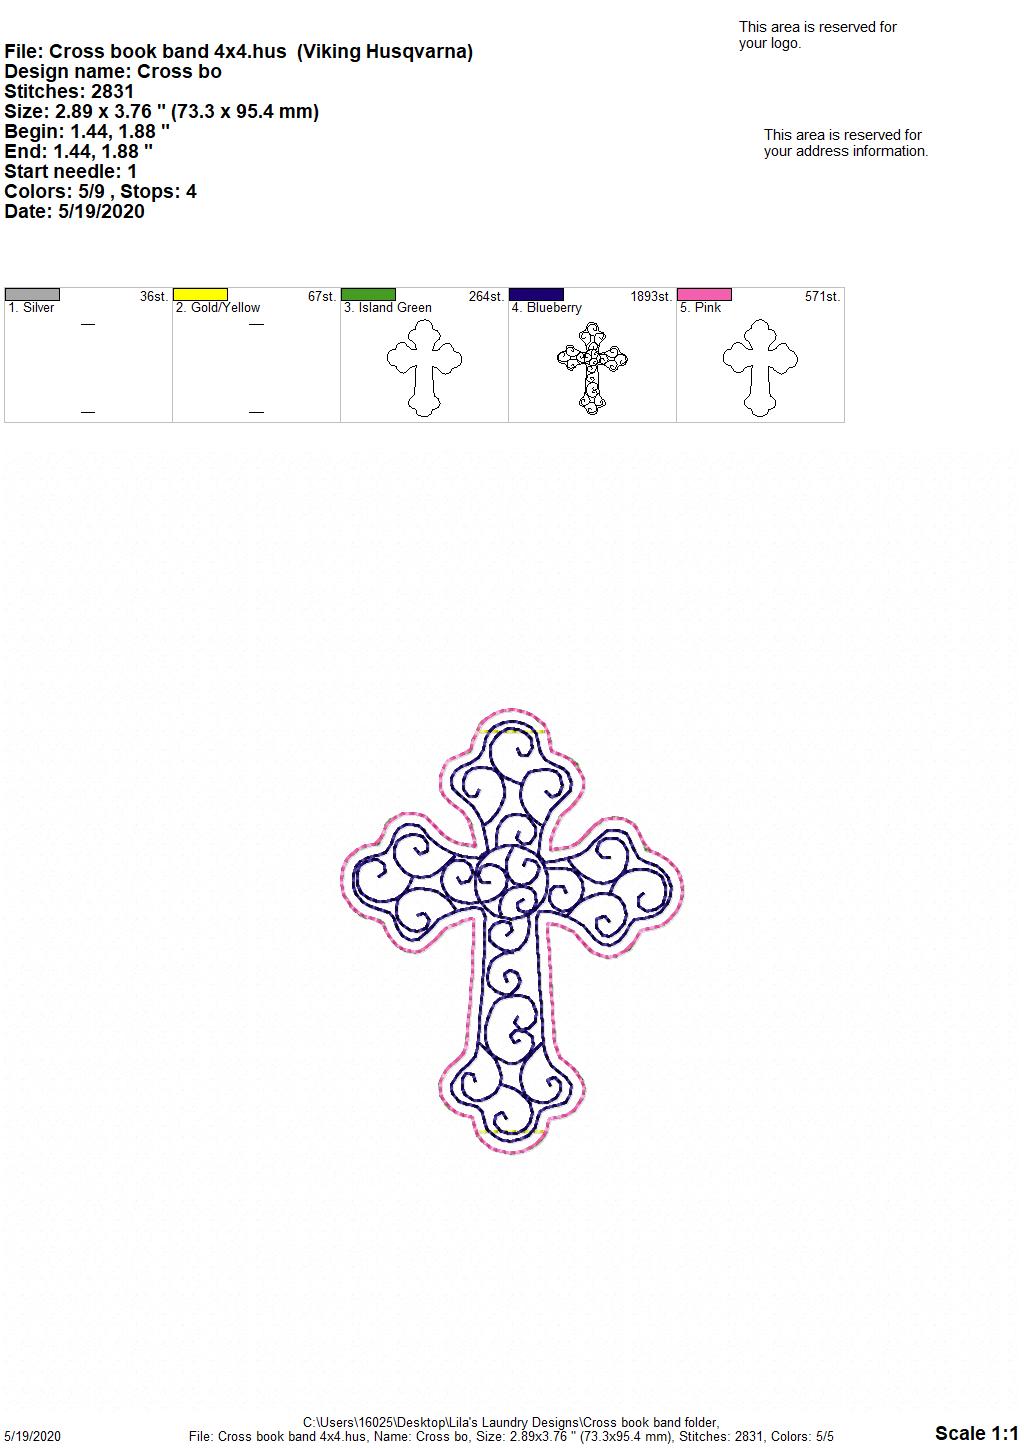 Cross Book Band - Digital Embroidery Design